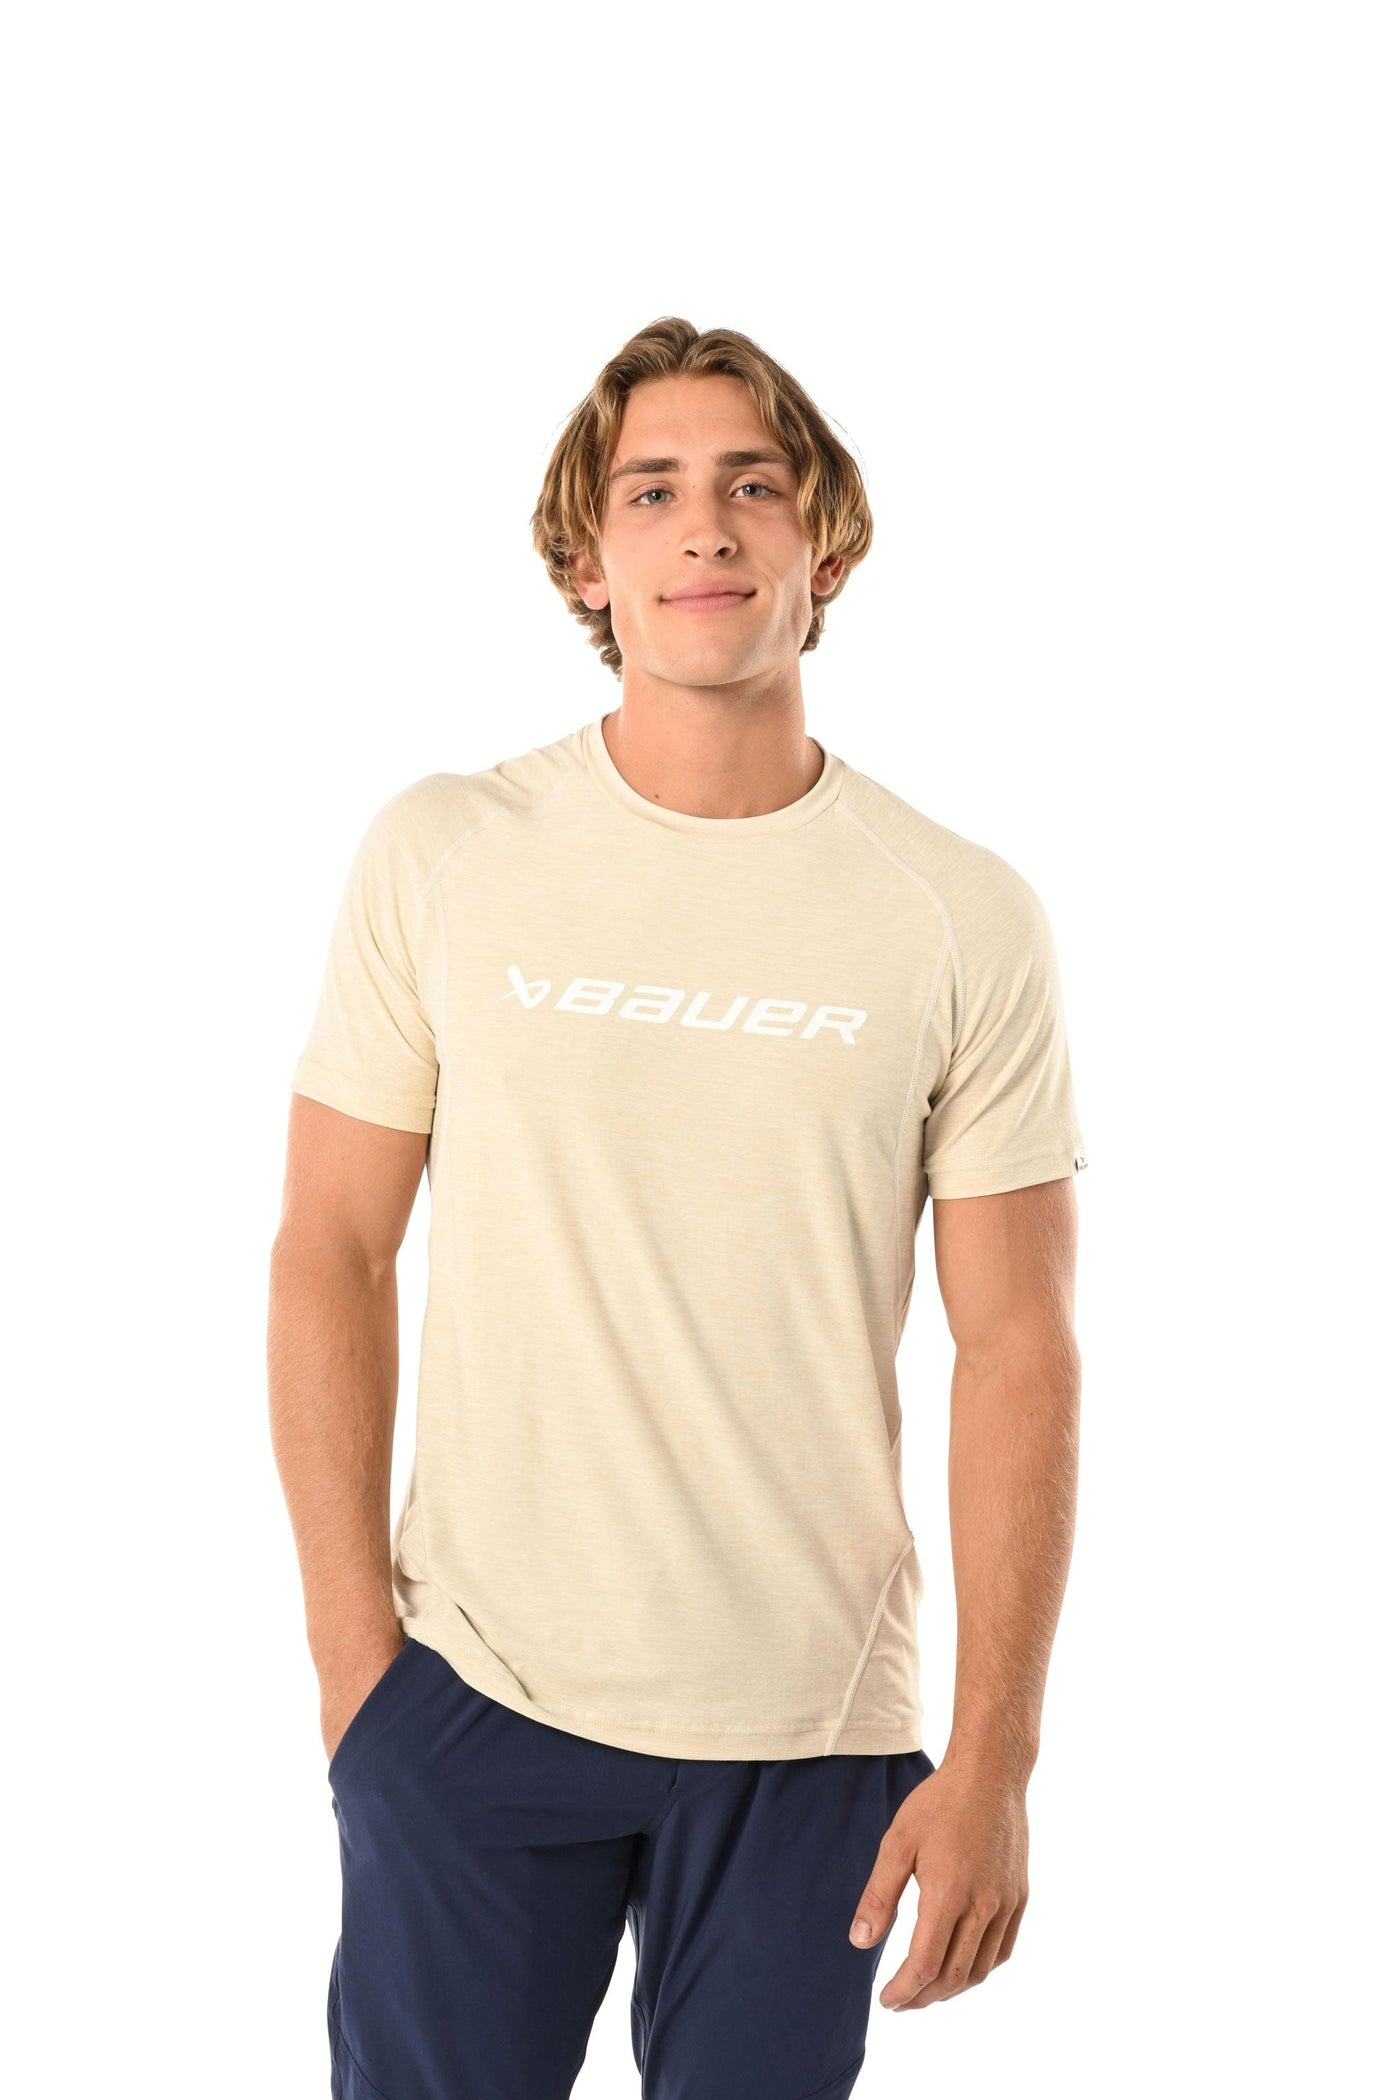 Bauer FLC Training Mens Shortsleeve Shirt - Oat - The Hockey Shop Source For Sports